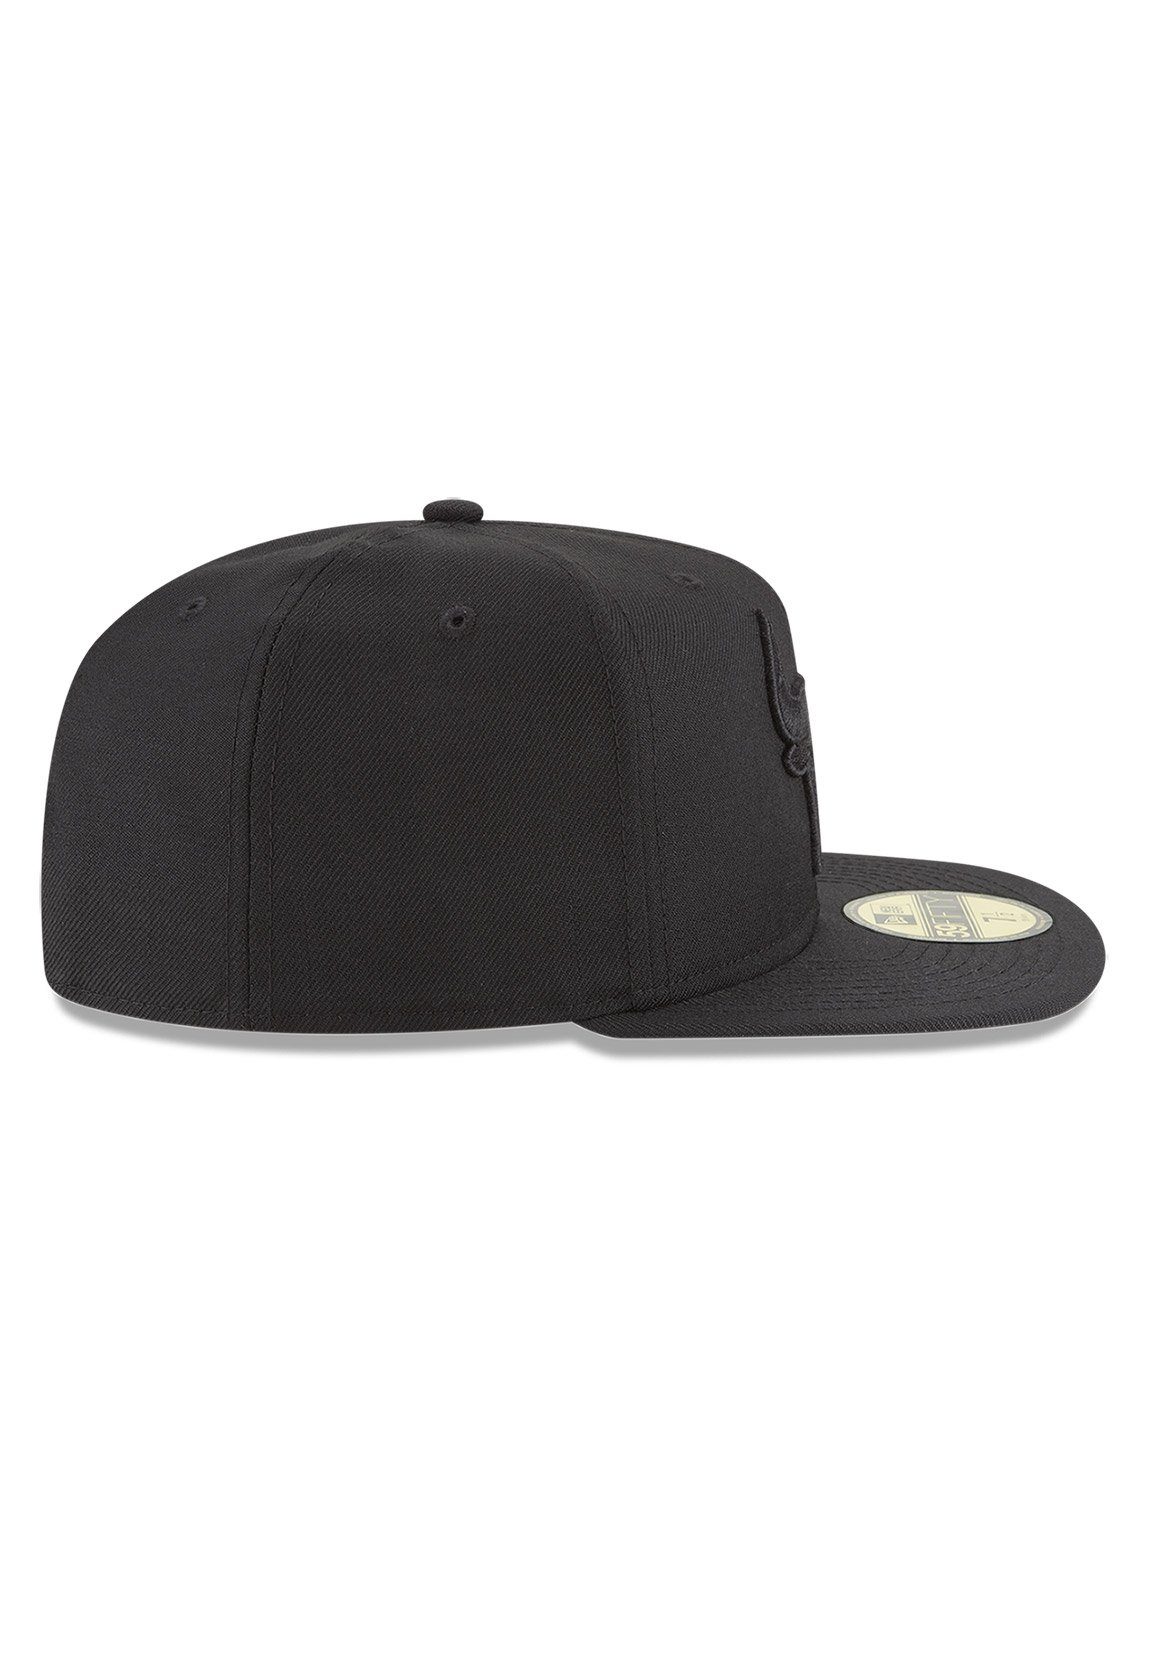 Era New New Era Schwarz Cap on CHICAGO Fitted Black Black 59Fifty Cap BULLS